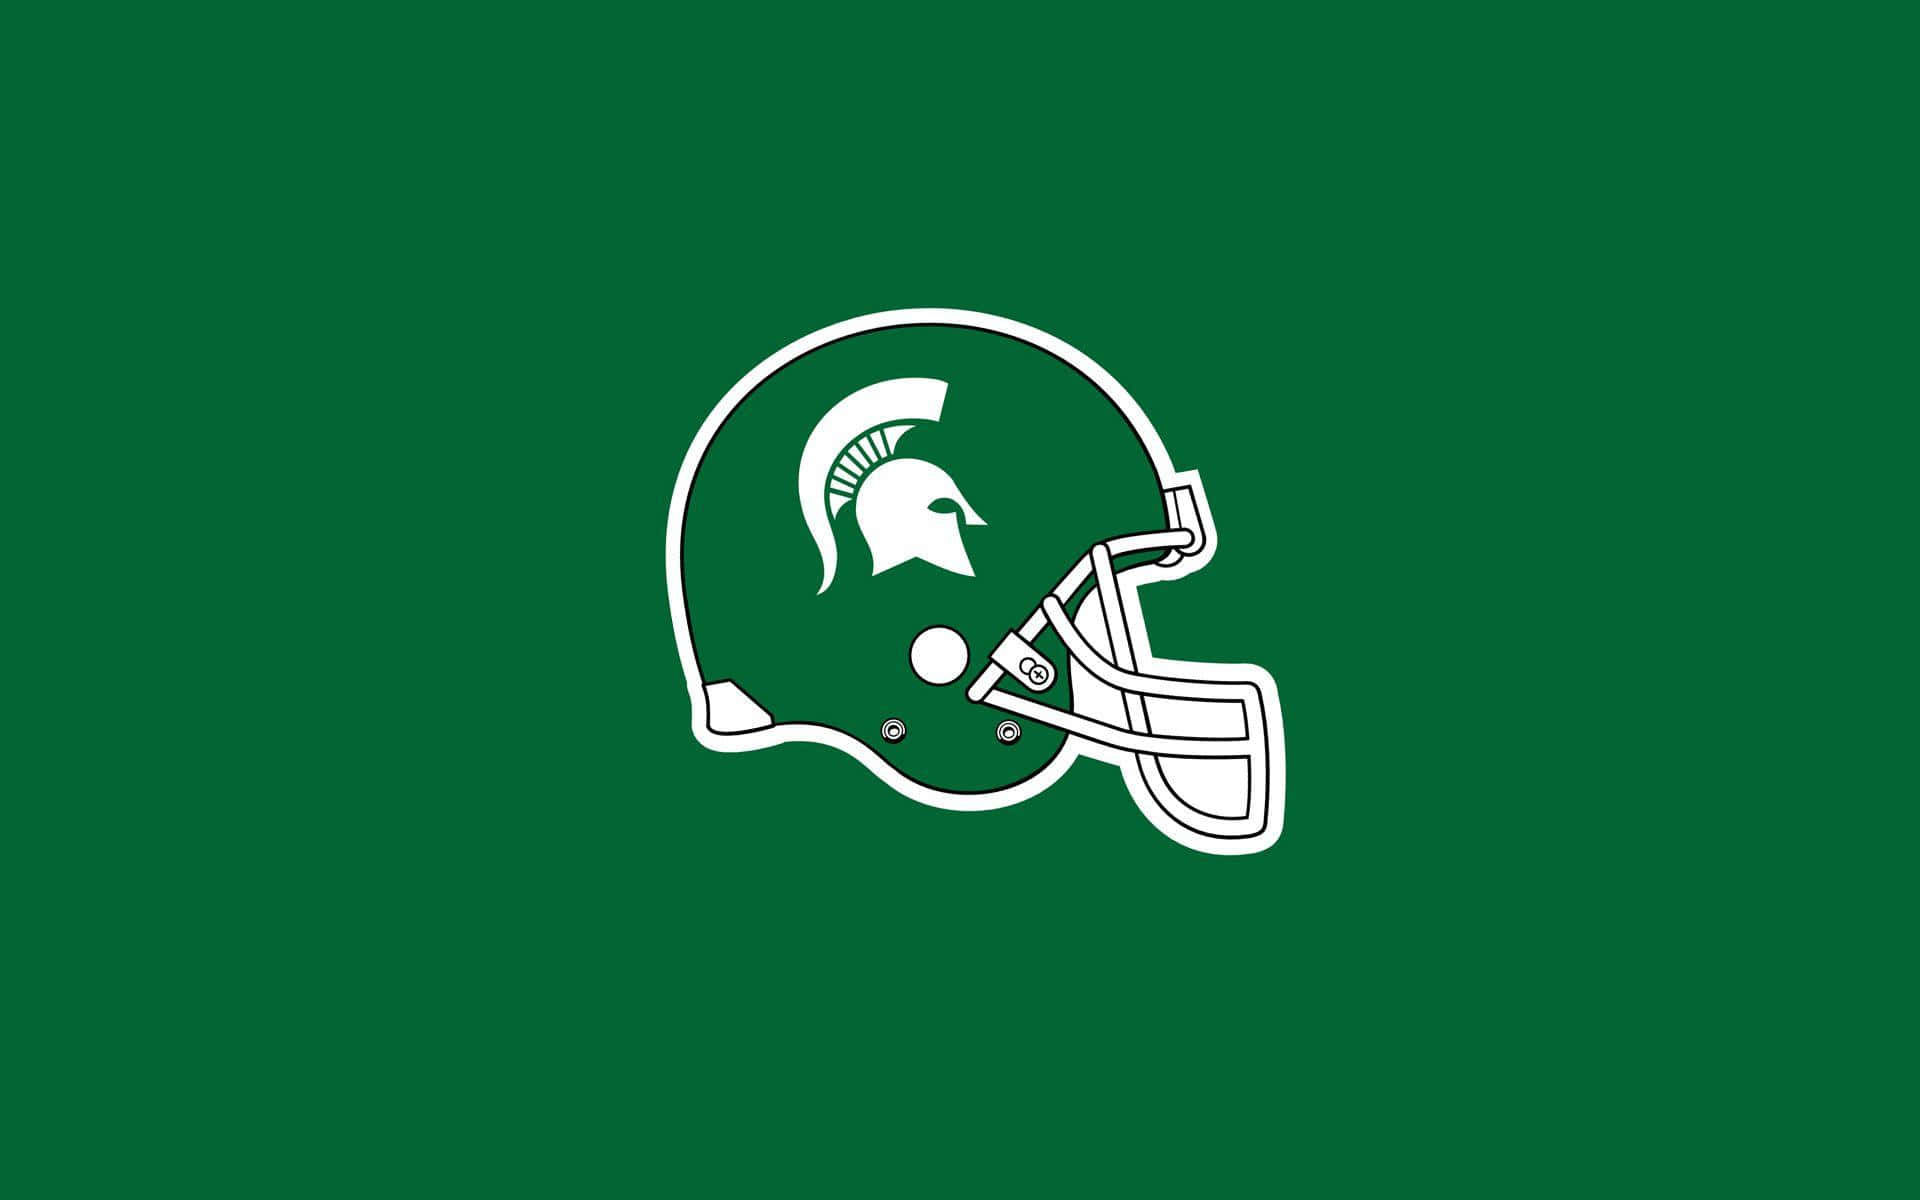 Michigan State Spartans logo på en grøn baggrund Wallpaper